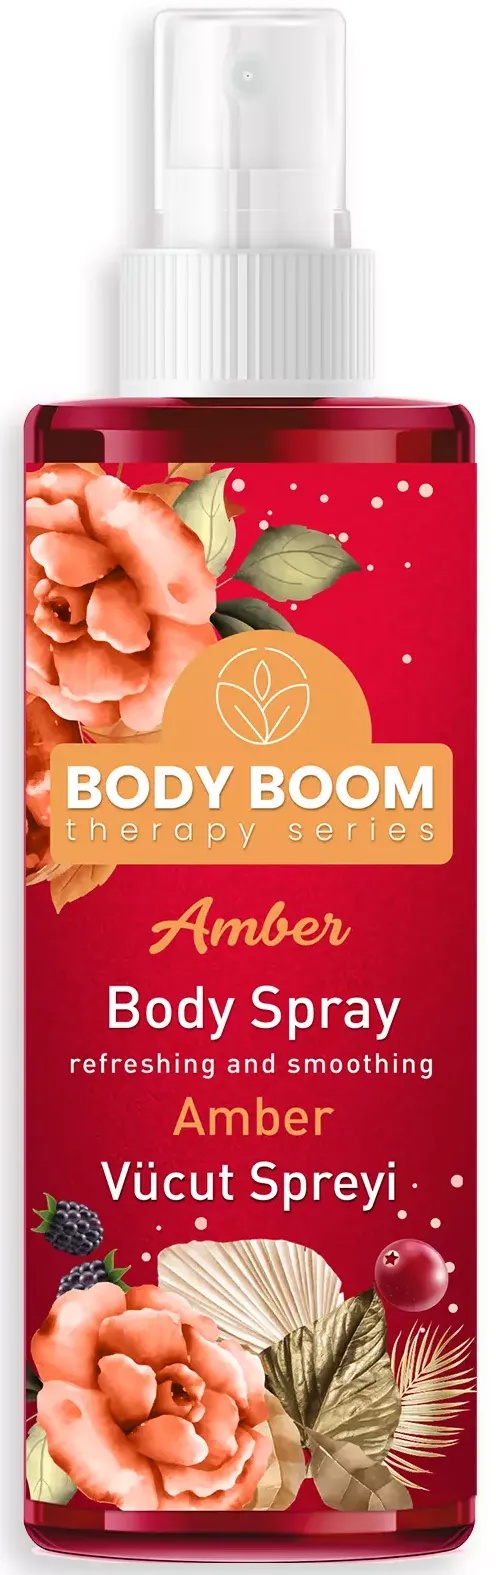 Procsin Body Boom Amber Body Spray